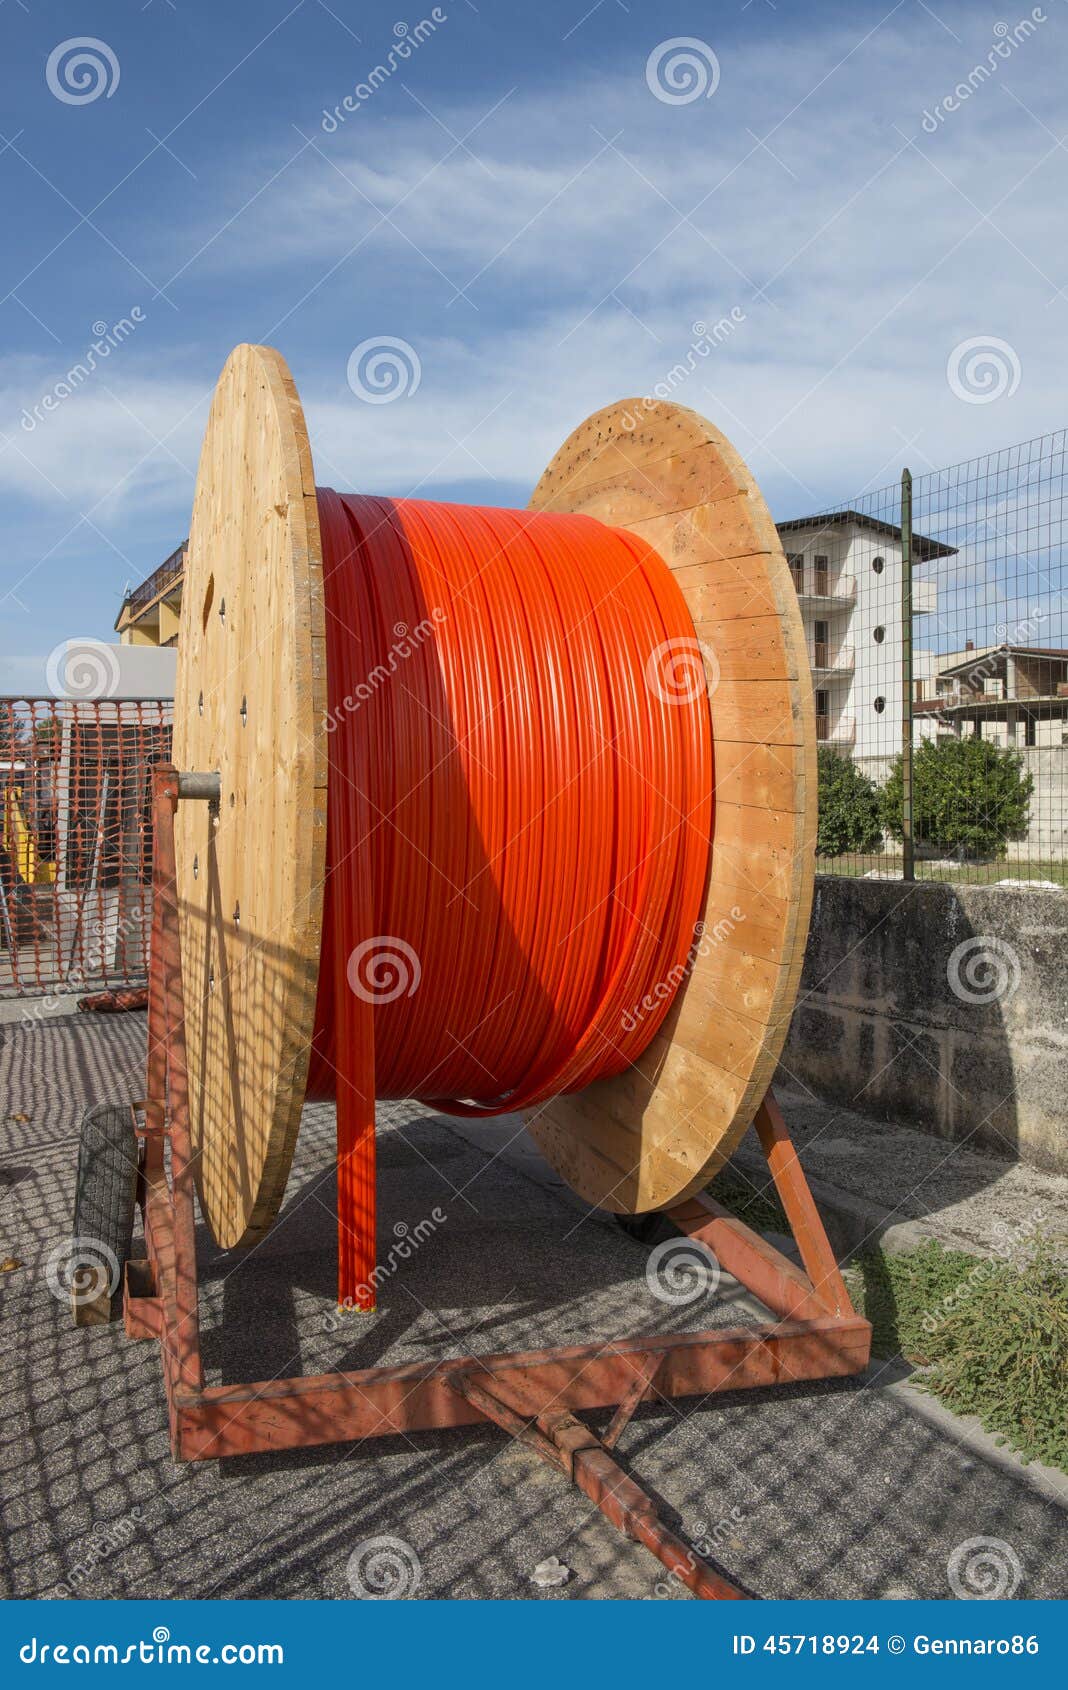 Cable Reels - Wooden Construction Stock Image | CartoonDealer.com #38950057